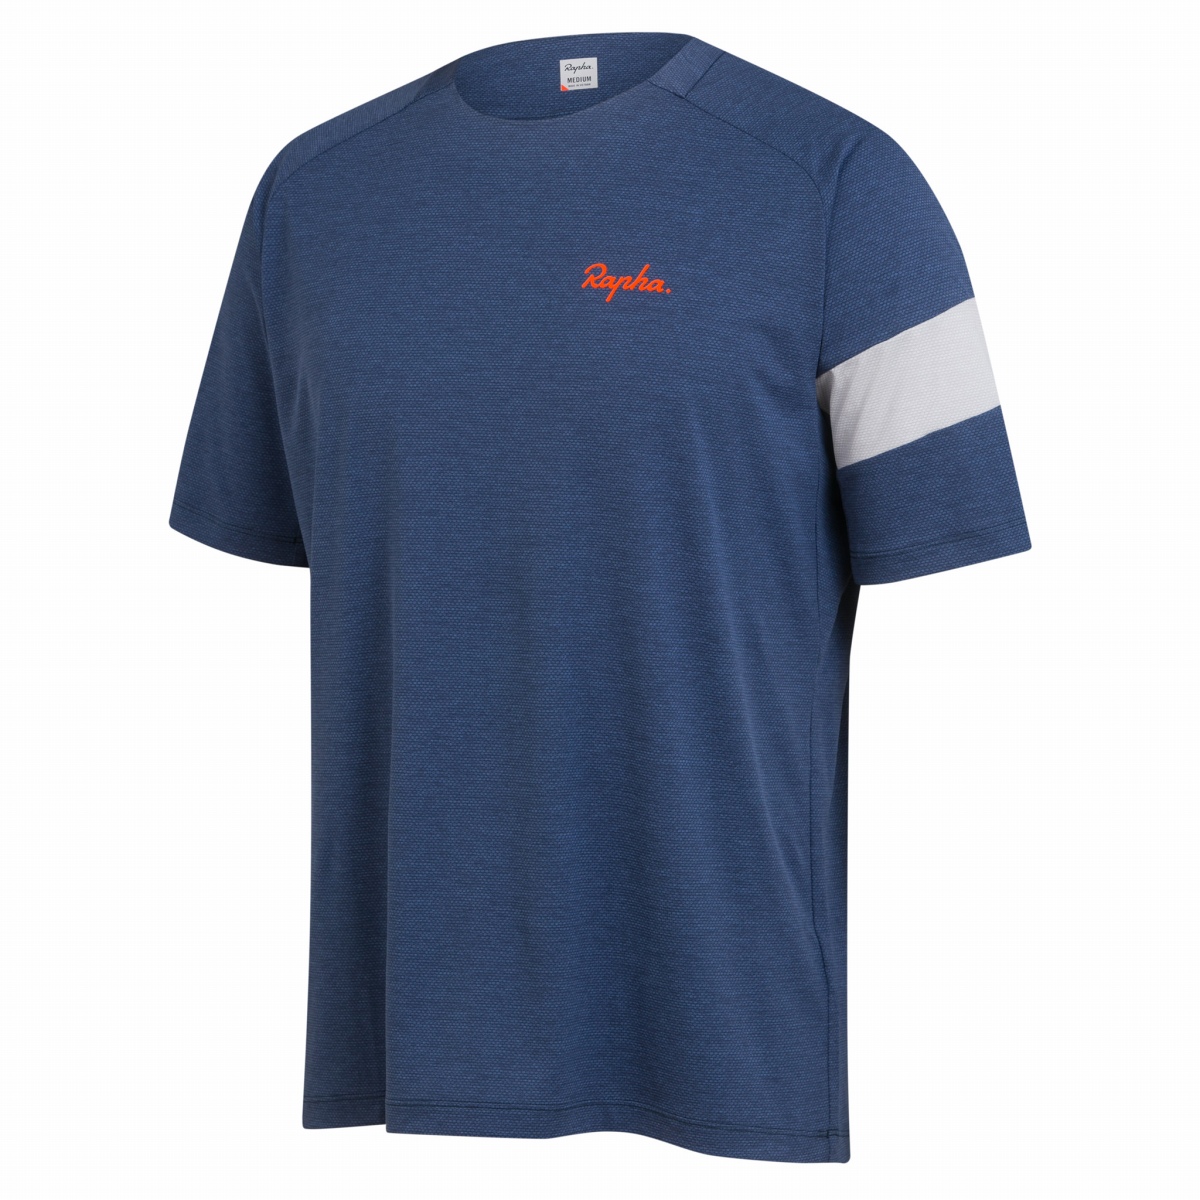 Rapha Trail Technical T-Shirt（Blue / Orange）